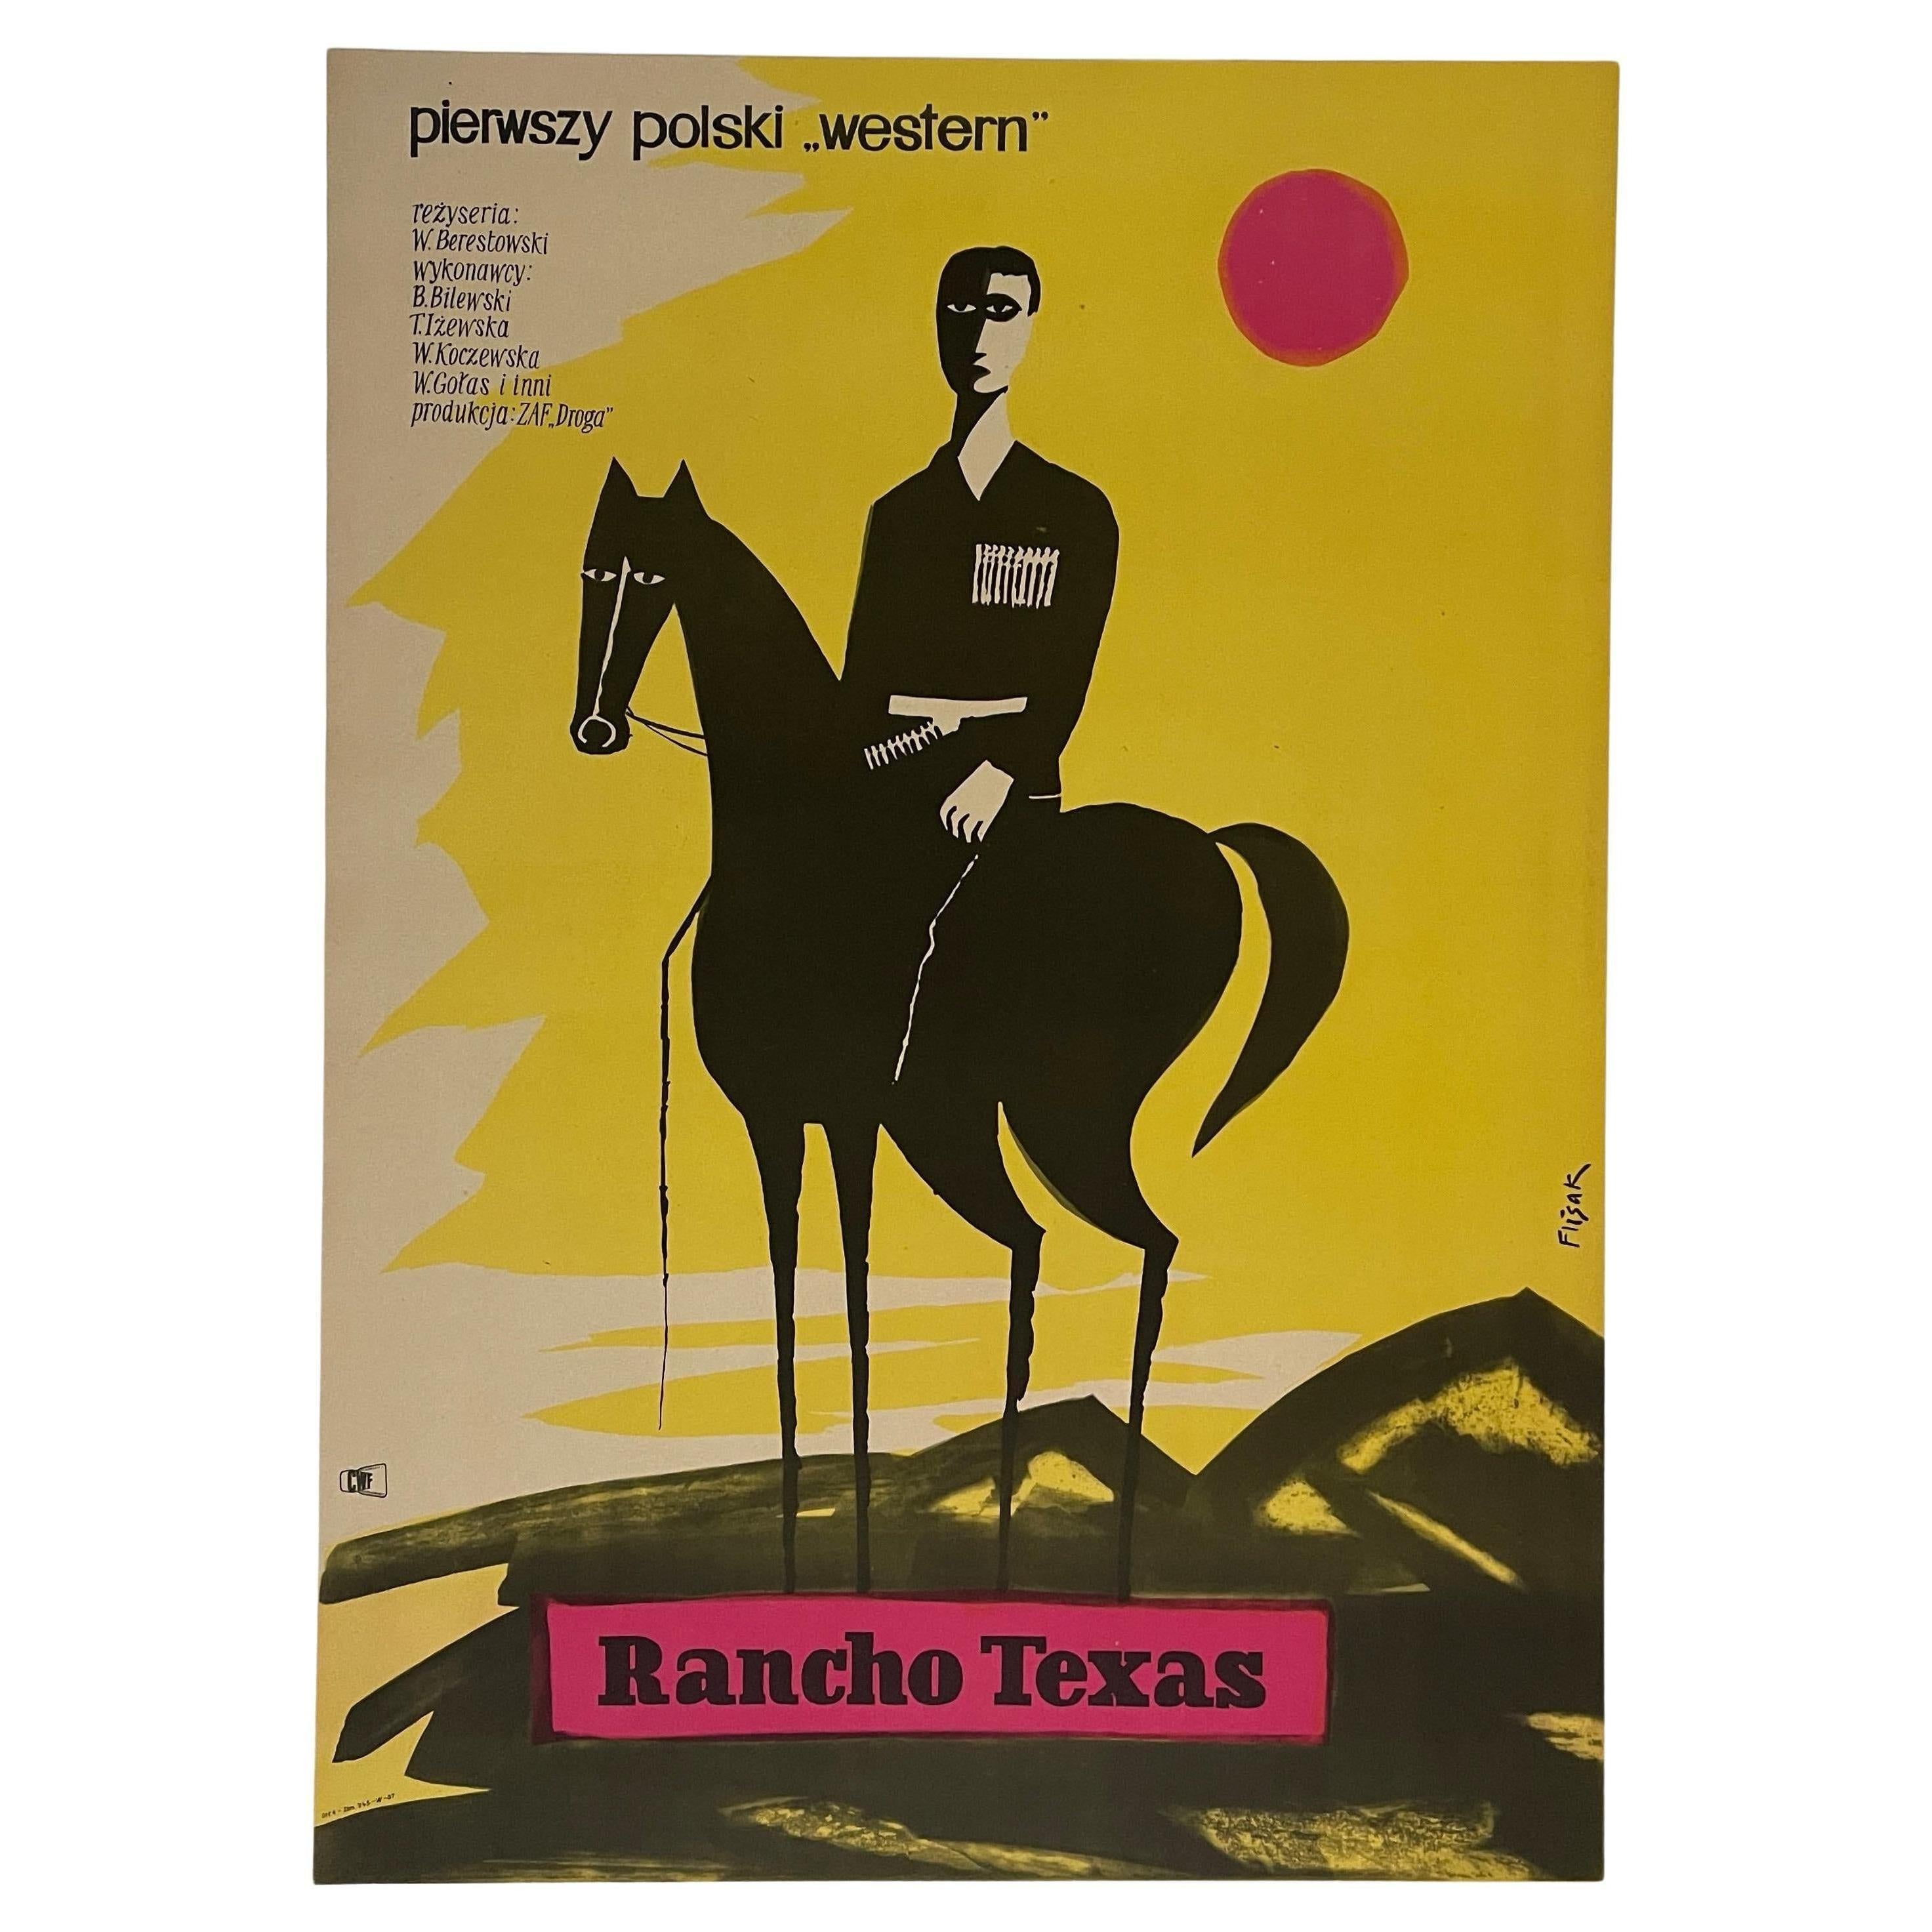 Ranch Texas, Vintage Polish Movie Poster by Jerzy Flisak, 1959